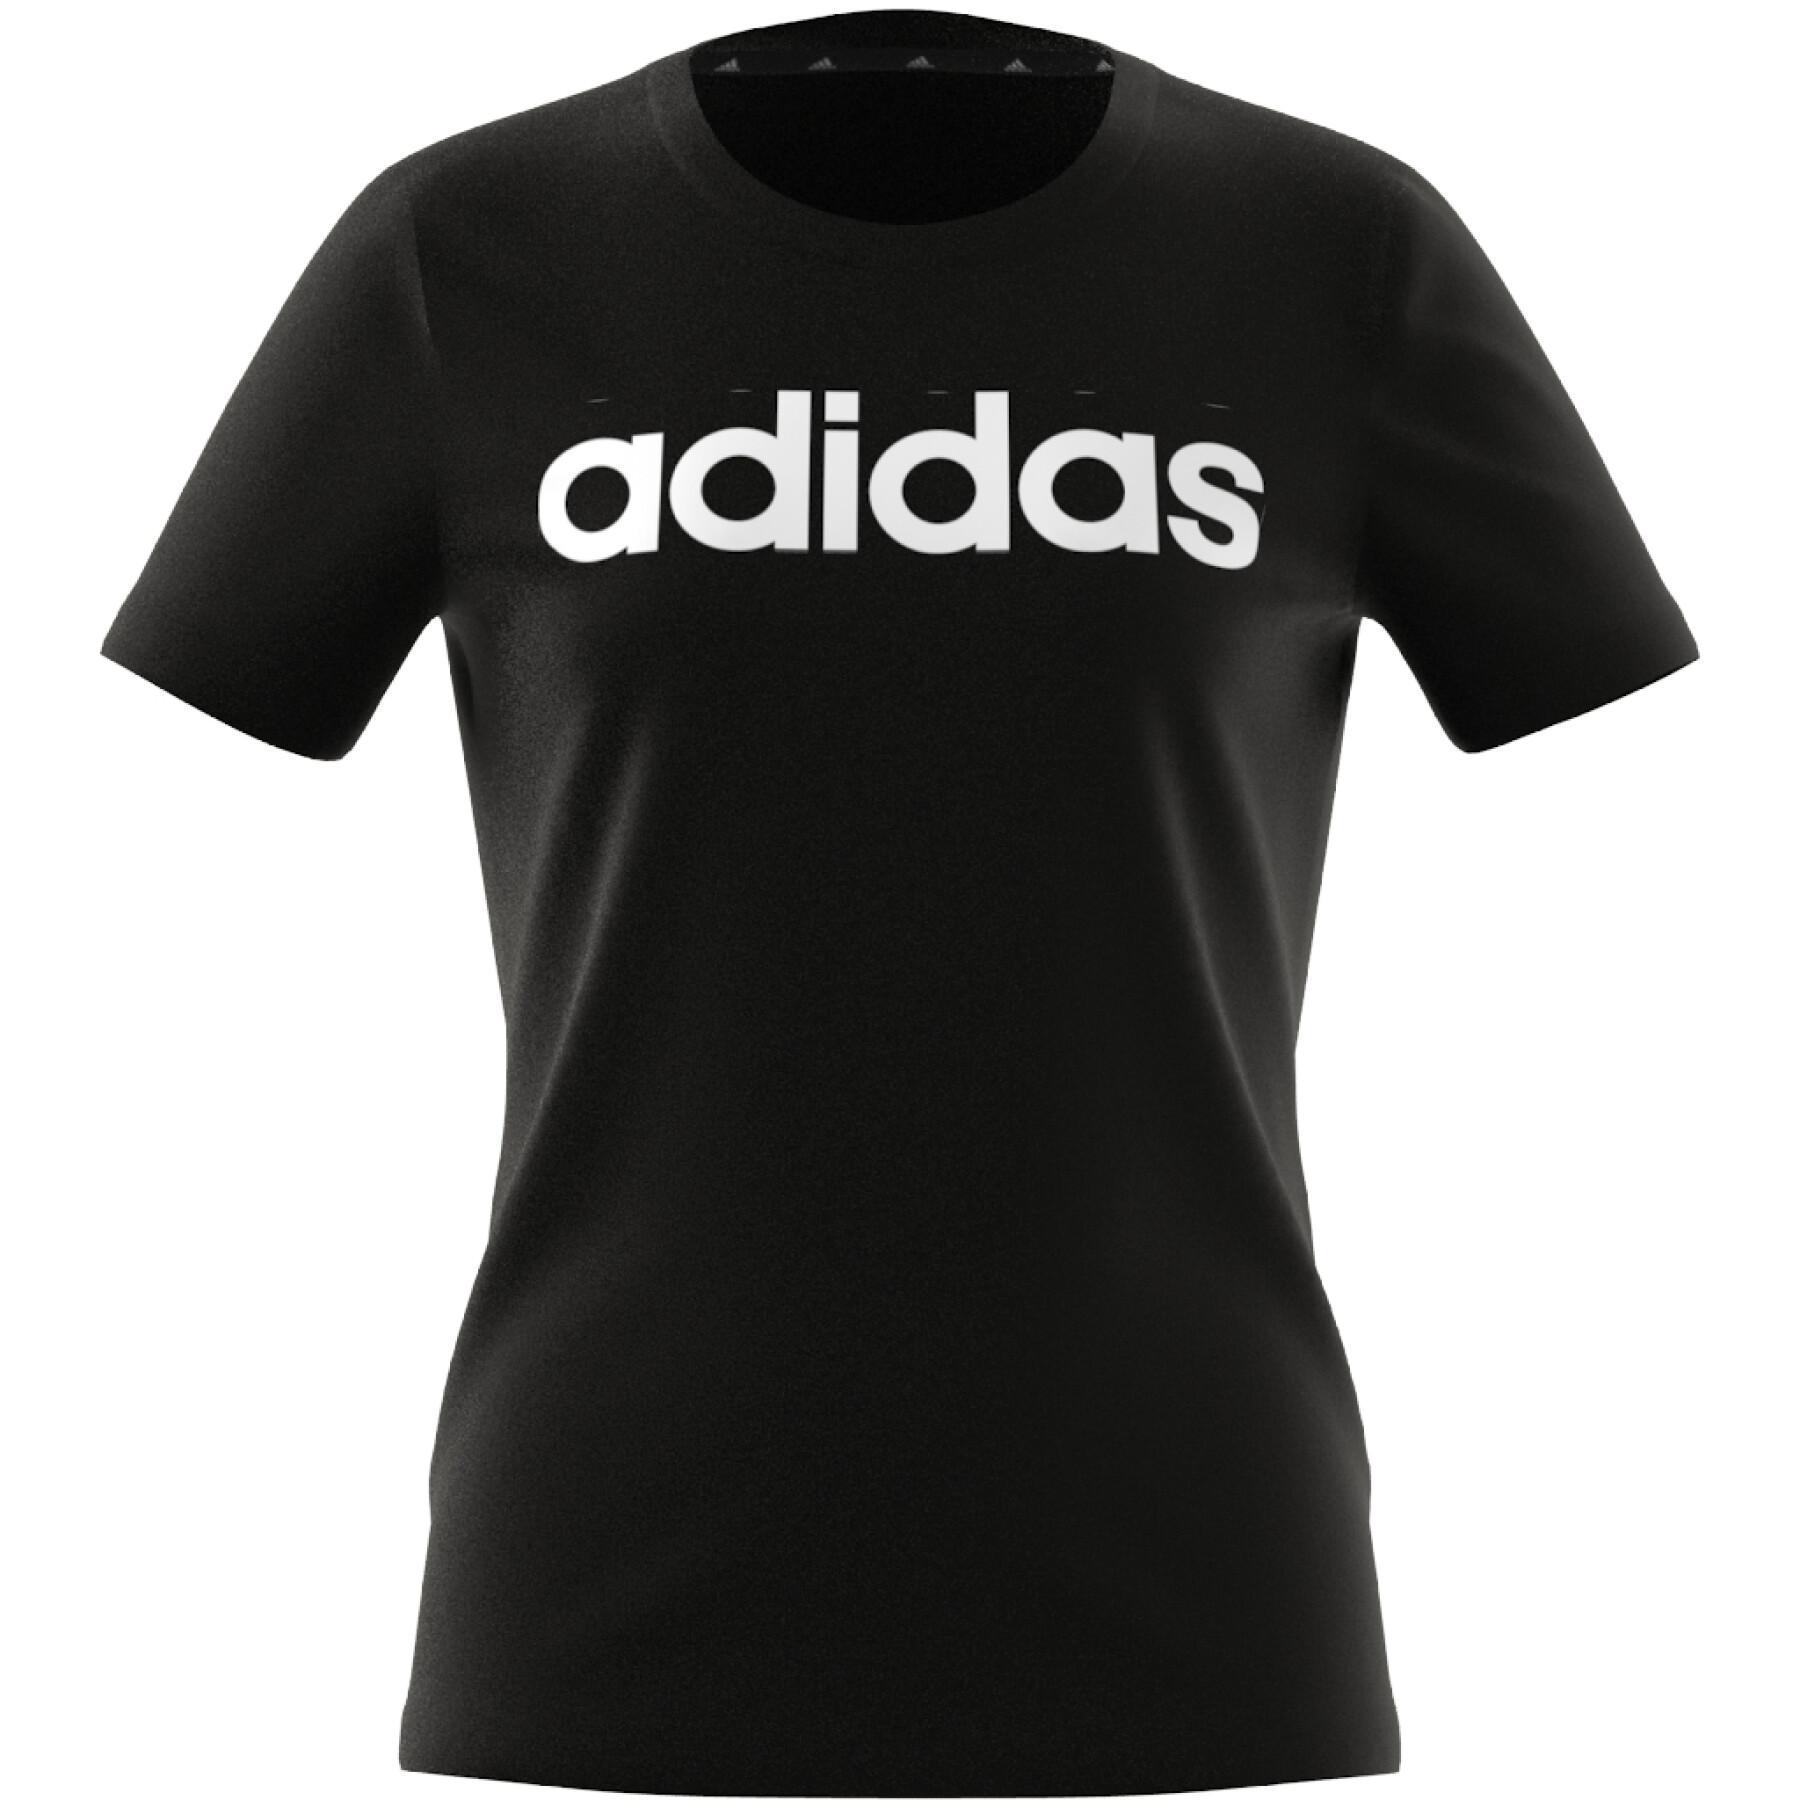 t-shirt polos - Logo Girl\'s logo adidas wear Essentials Handball - T-shirts cotton - and Linear Textile